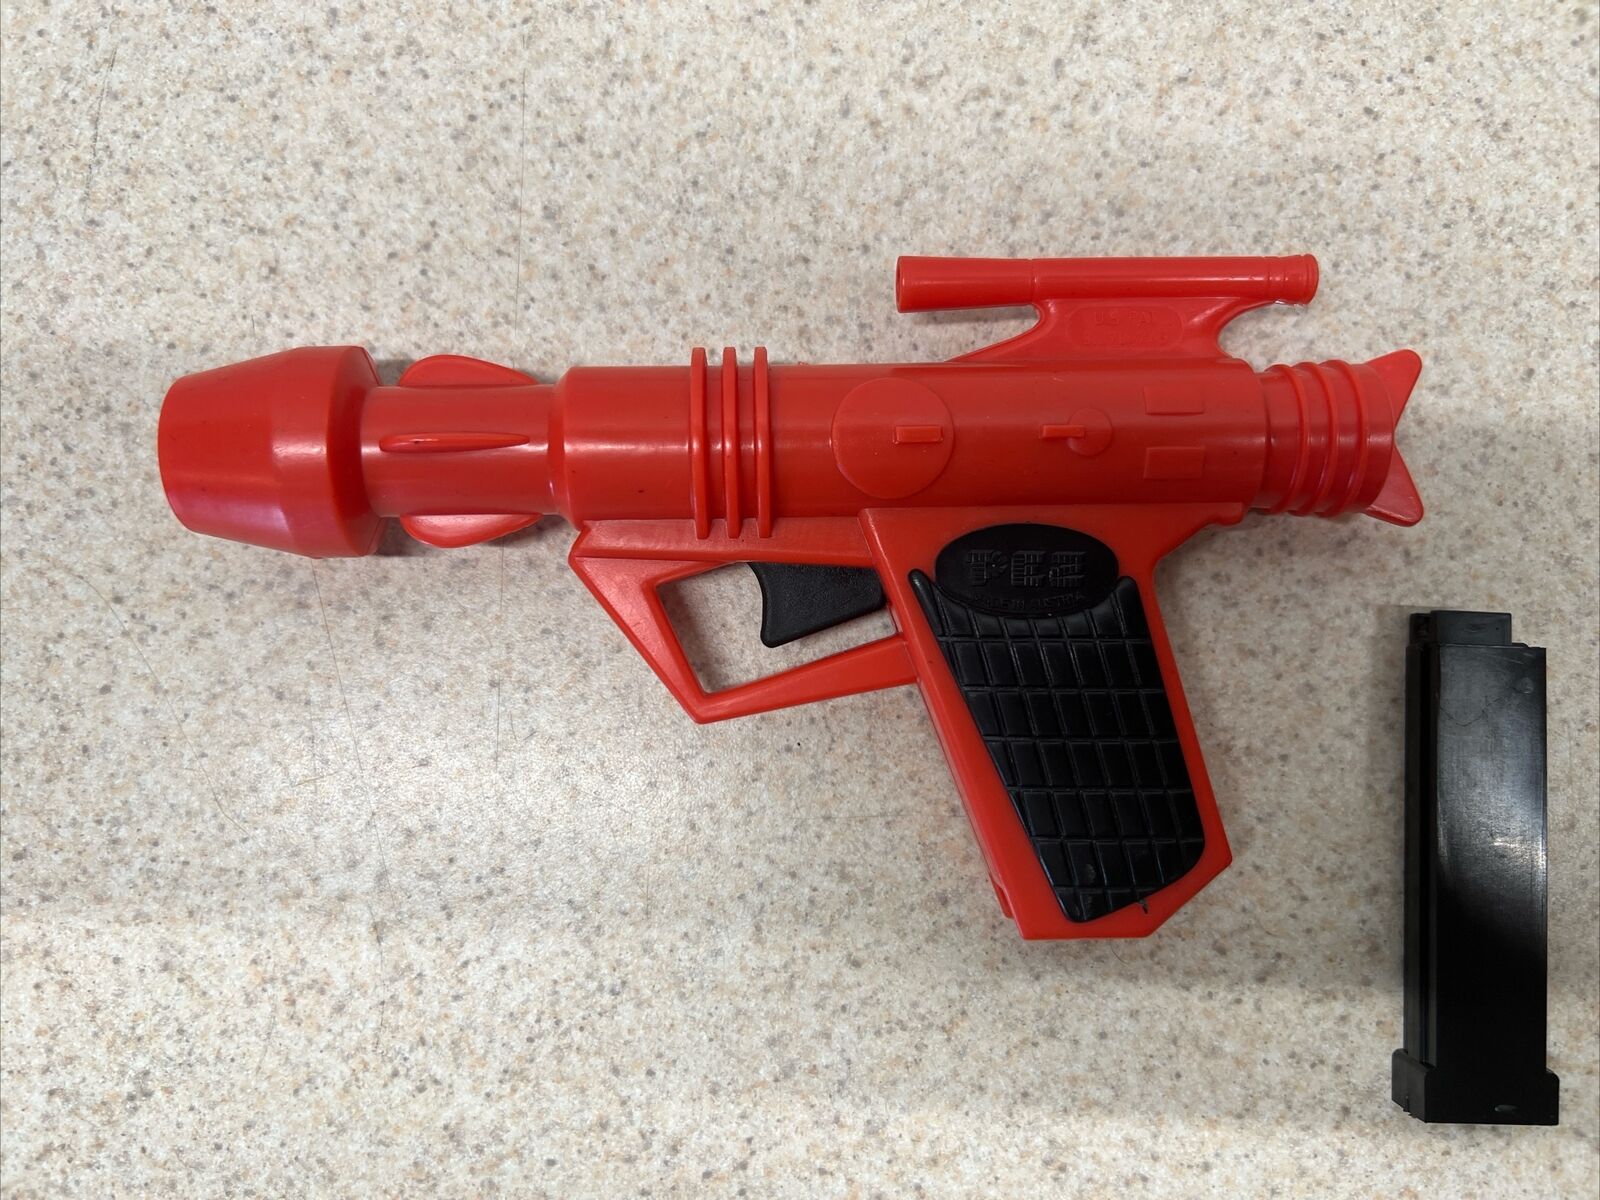 1981 Vintage Red PEZ Space Gun Candy Dispenser U. S. Pat. 3,370,746